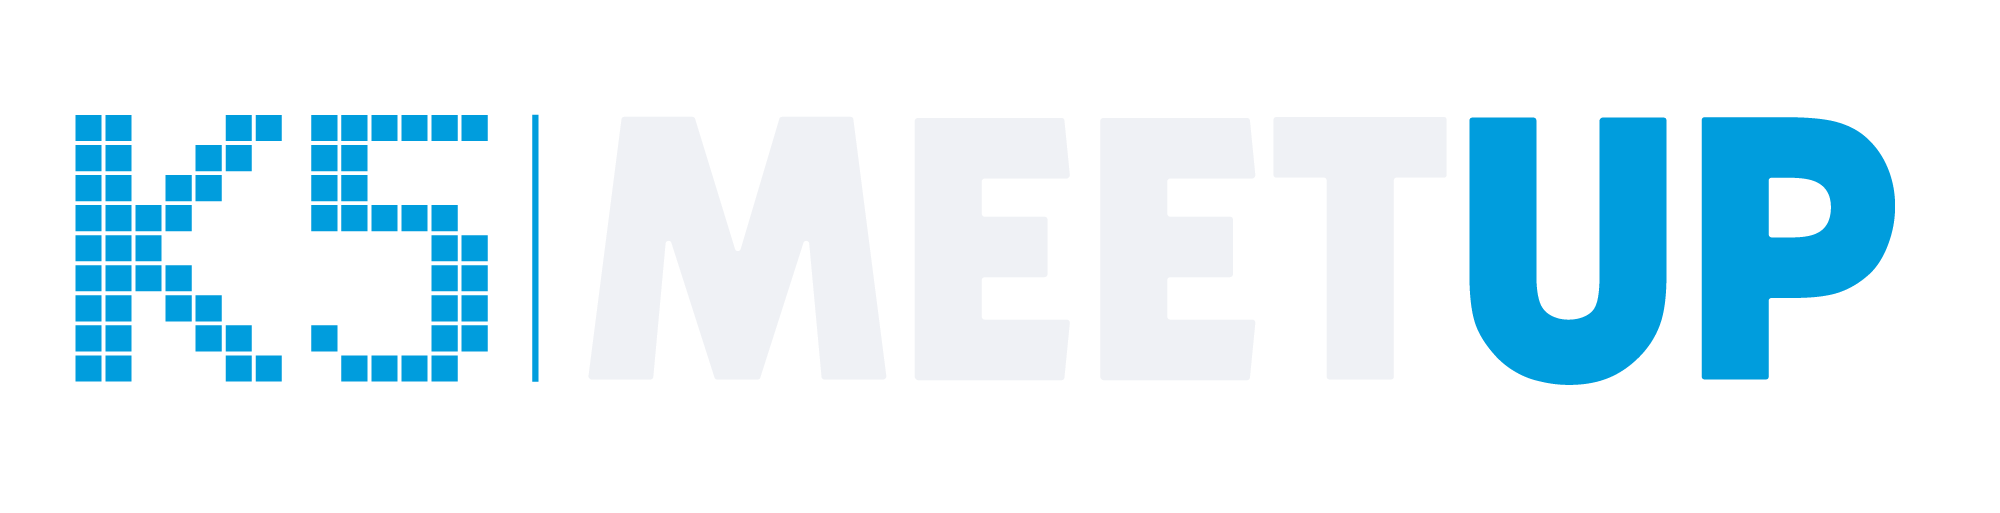 K5 Meetup logo